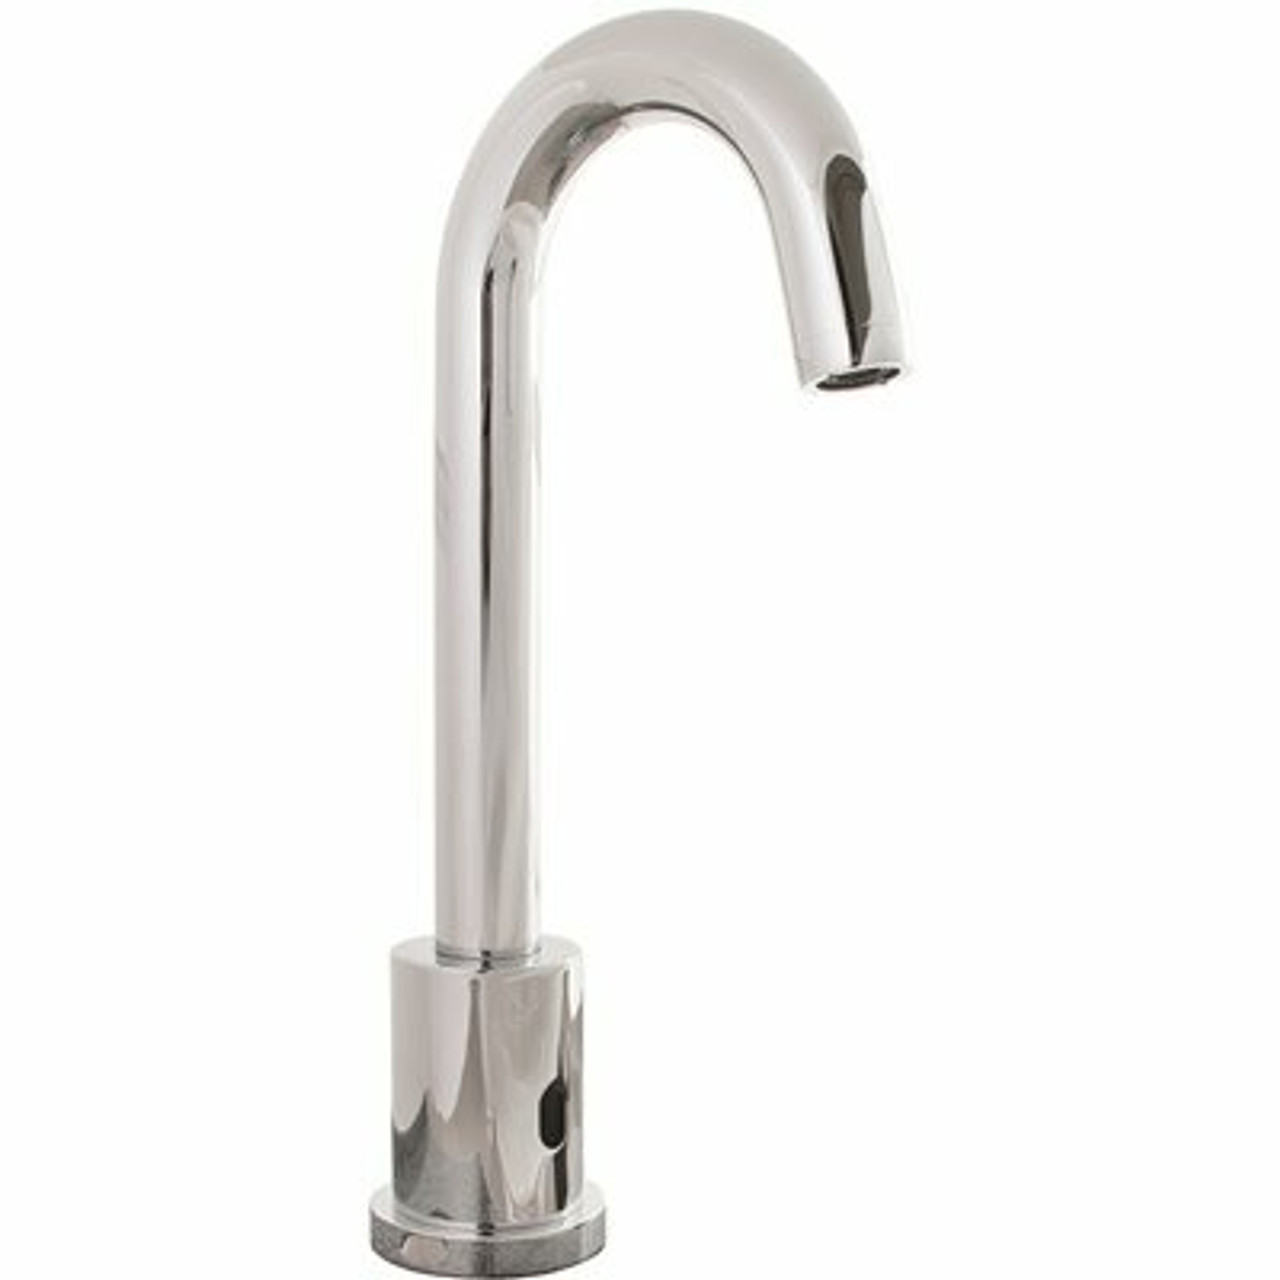 Speakman Sensorflo Ac Powered Single Hole Touchless Bathroom Faucet With Gooseneck In Polished Chrome - 312589554